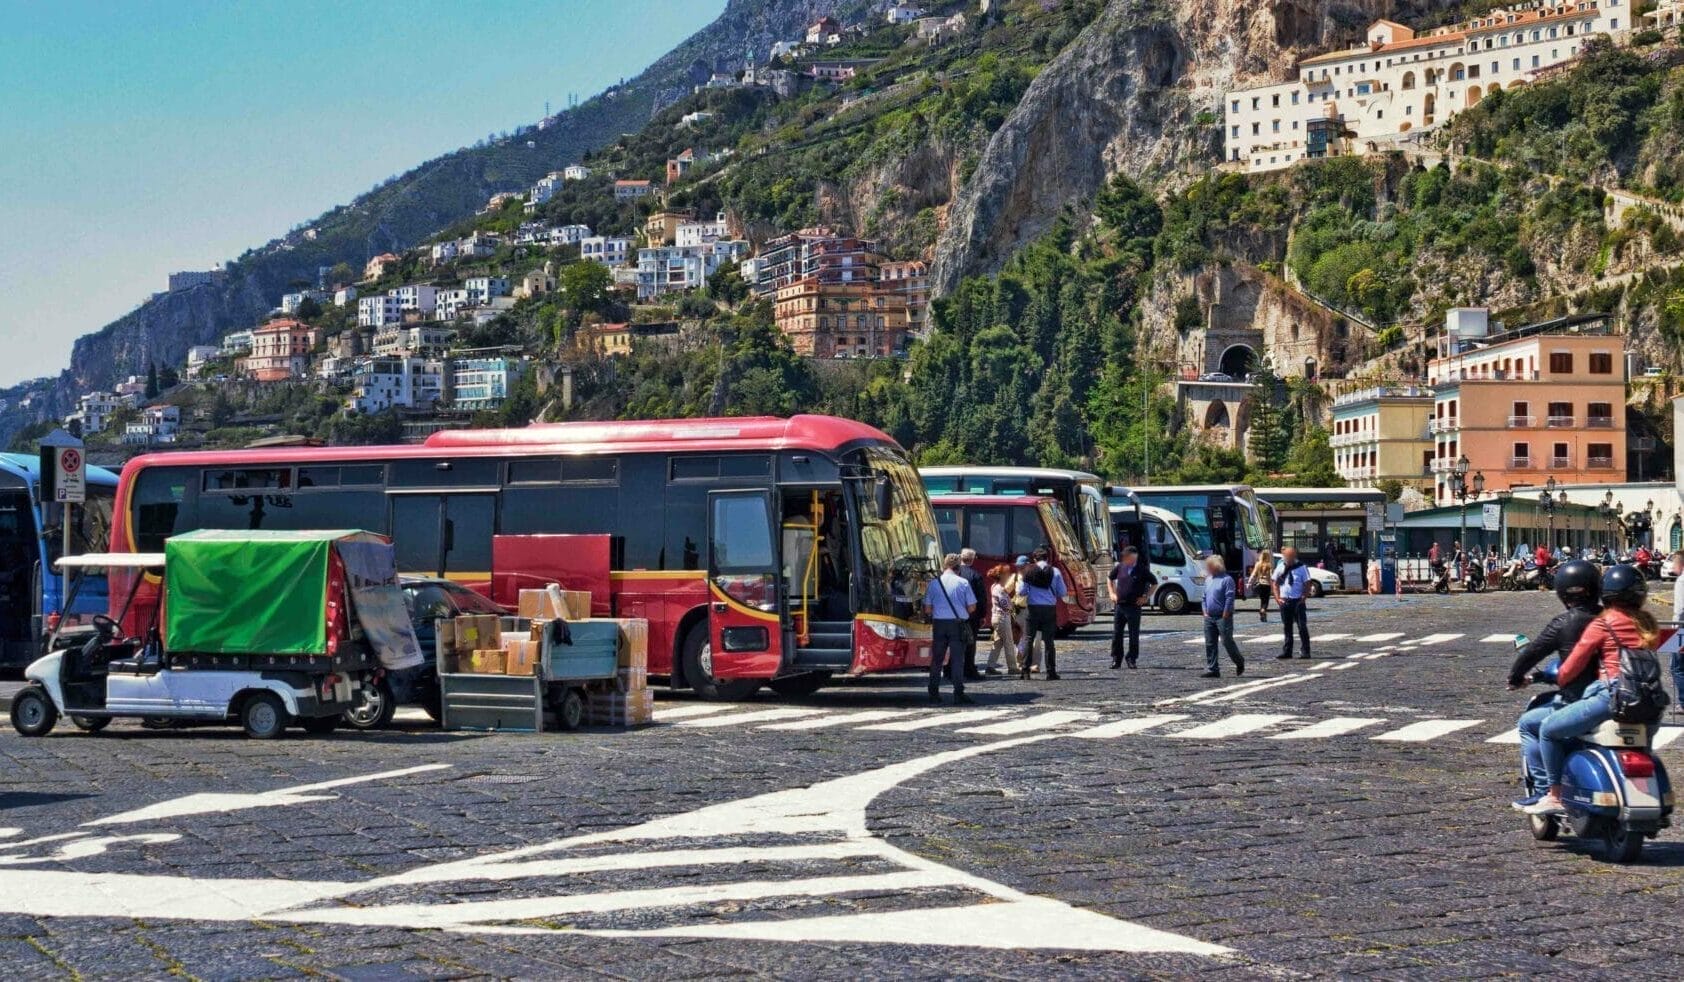 Amalfi overtourism bus